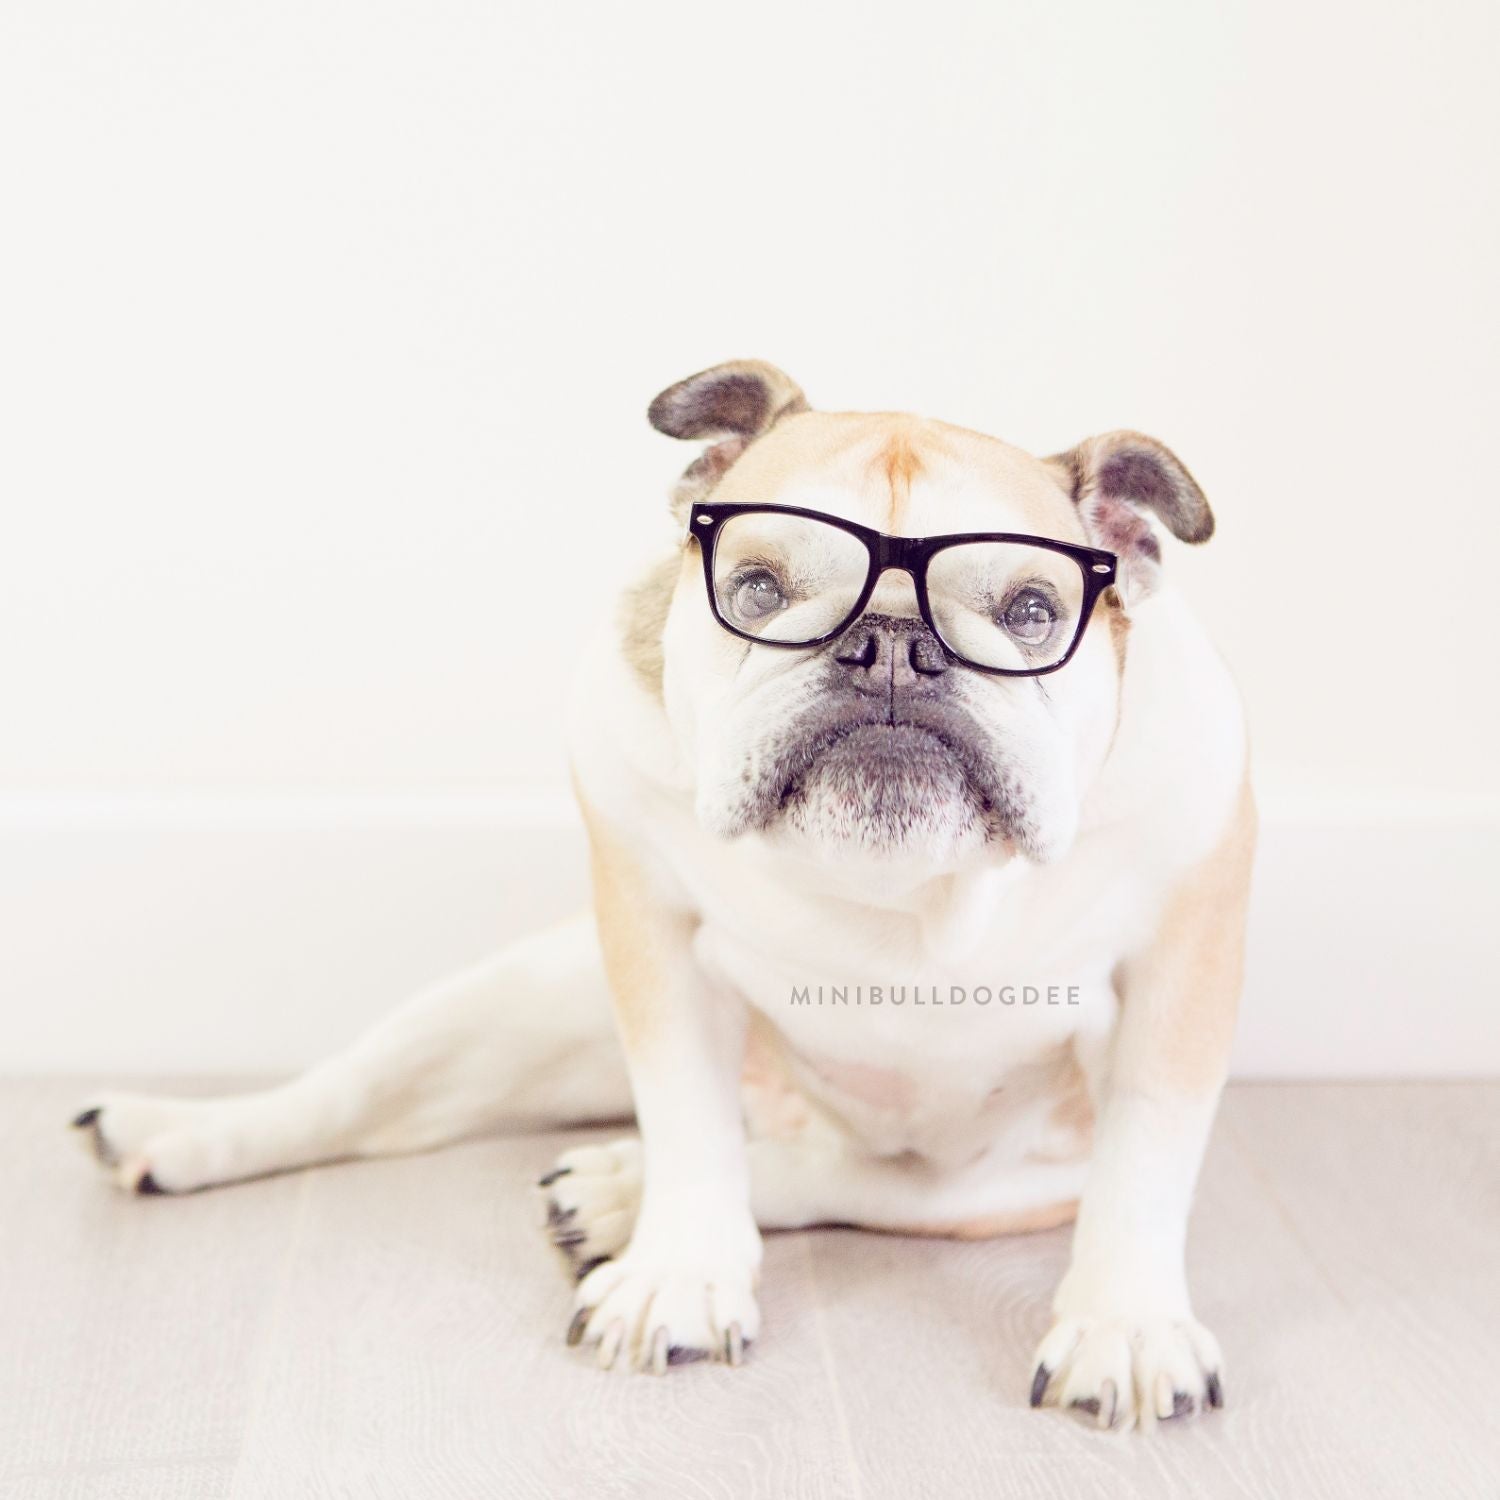 Mini Bulldog Dee wearing glasses